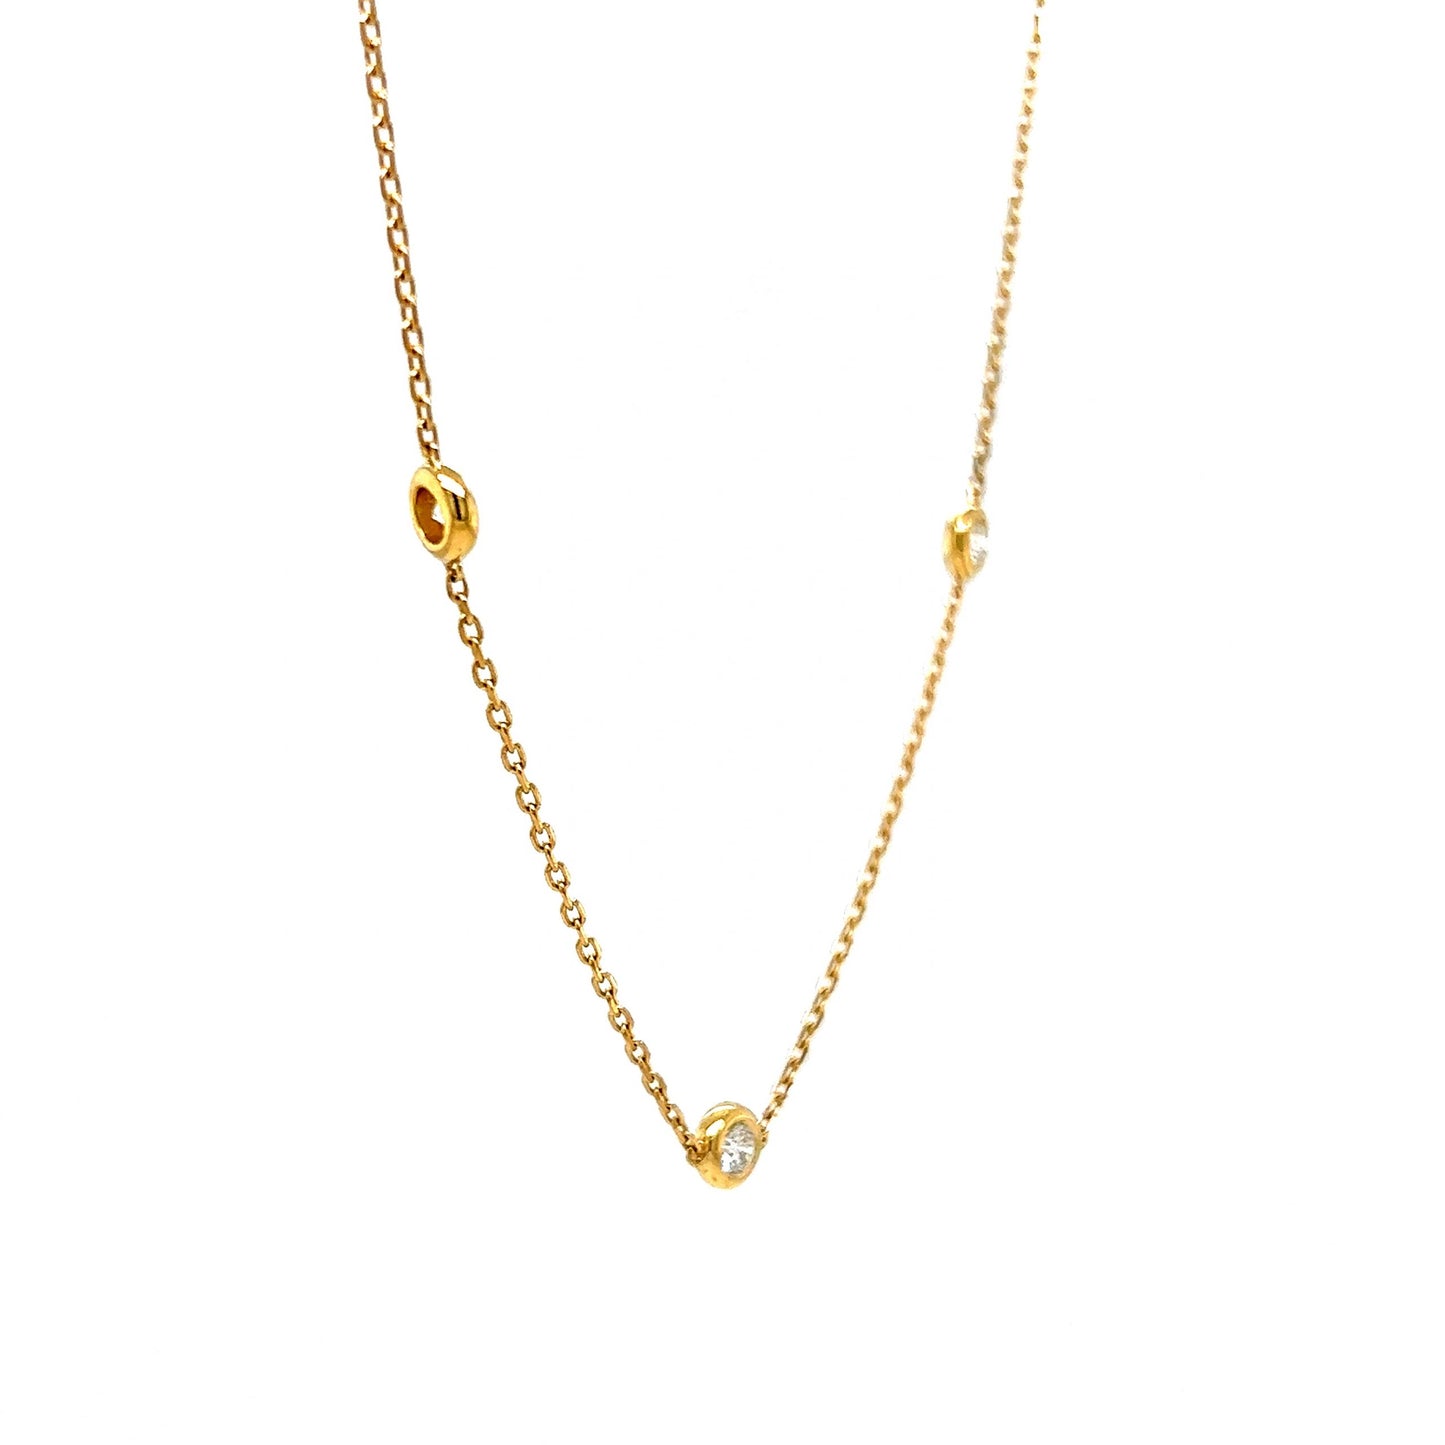 Classic Bezel Set Round Diamond Necklace in 14k Yellow Gold